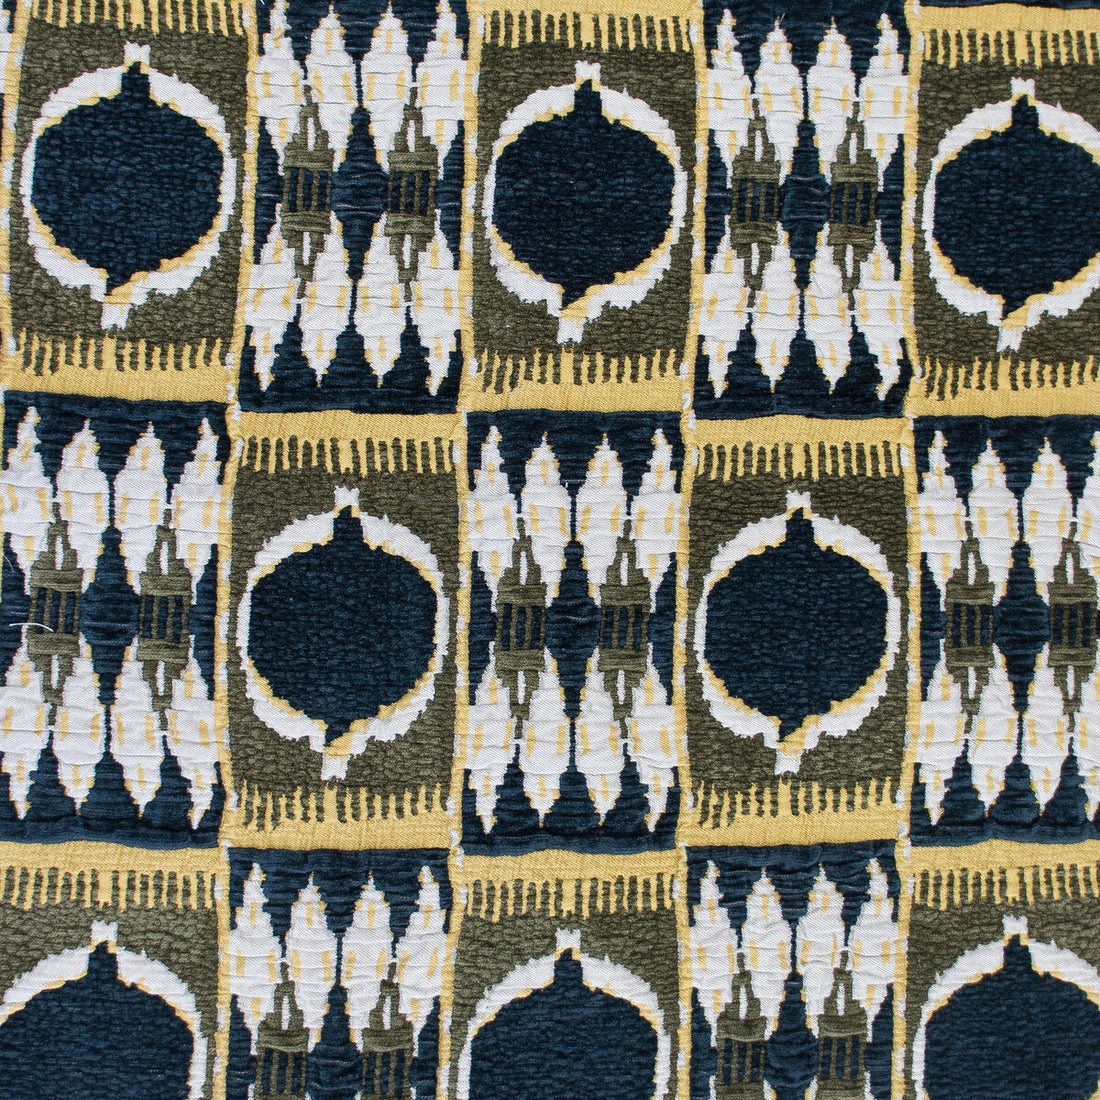 Cuzco fabric in marron color - pattern GDT5571.001.0 - by Gaston y Daniela in the Gaston Nuevo Mundo collection